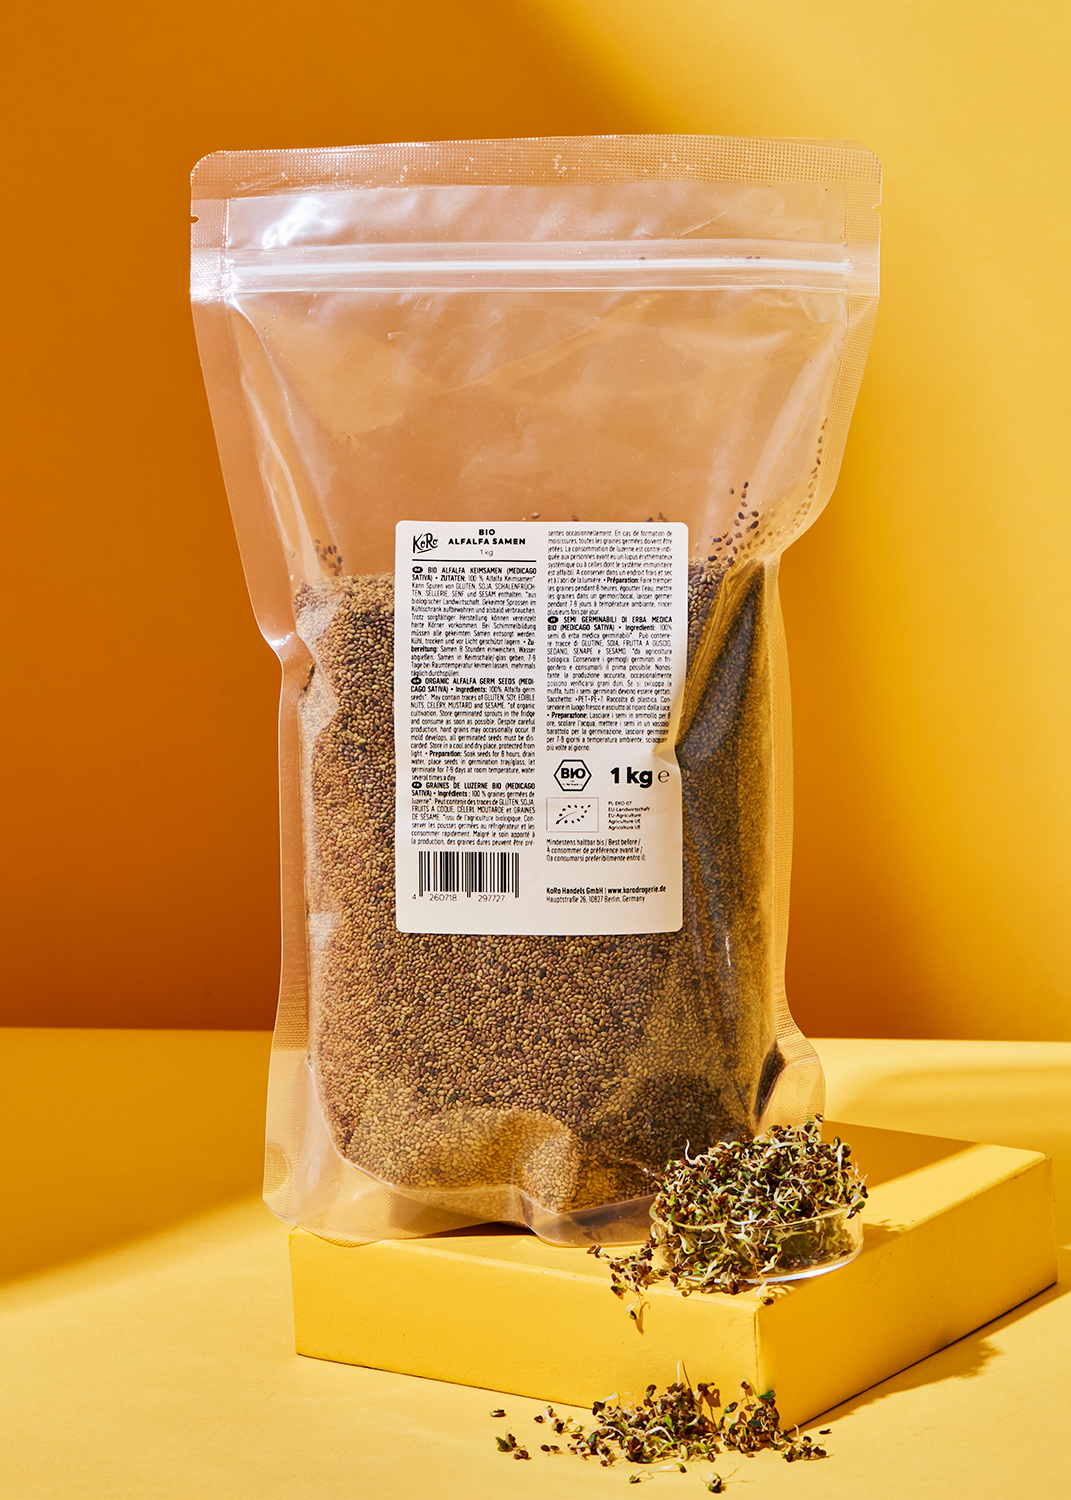 Luzerne Samen BIO Kamelur 1kg BIO Alfalfa Sprossen Samen Alfalfa Samen in biologisch abbaubarer Verpackung Keimsaat ohne Zusätze 